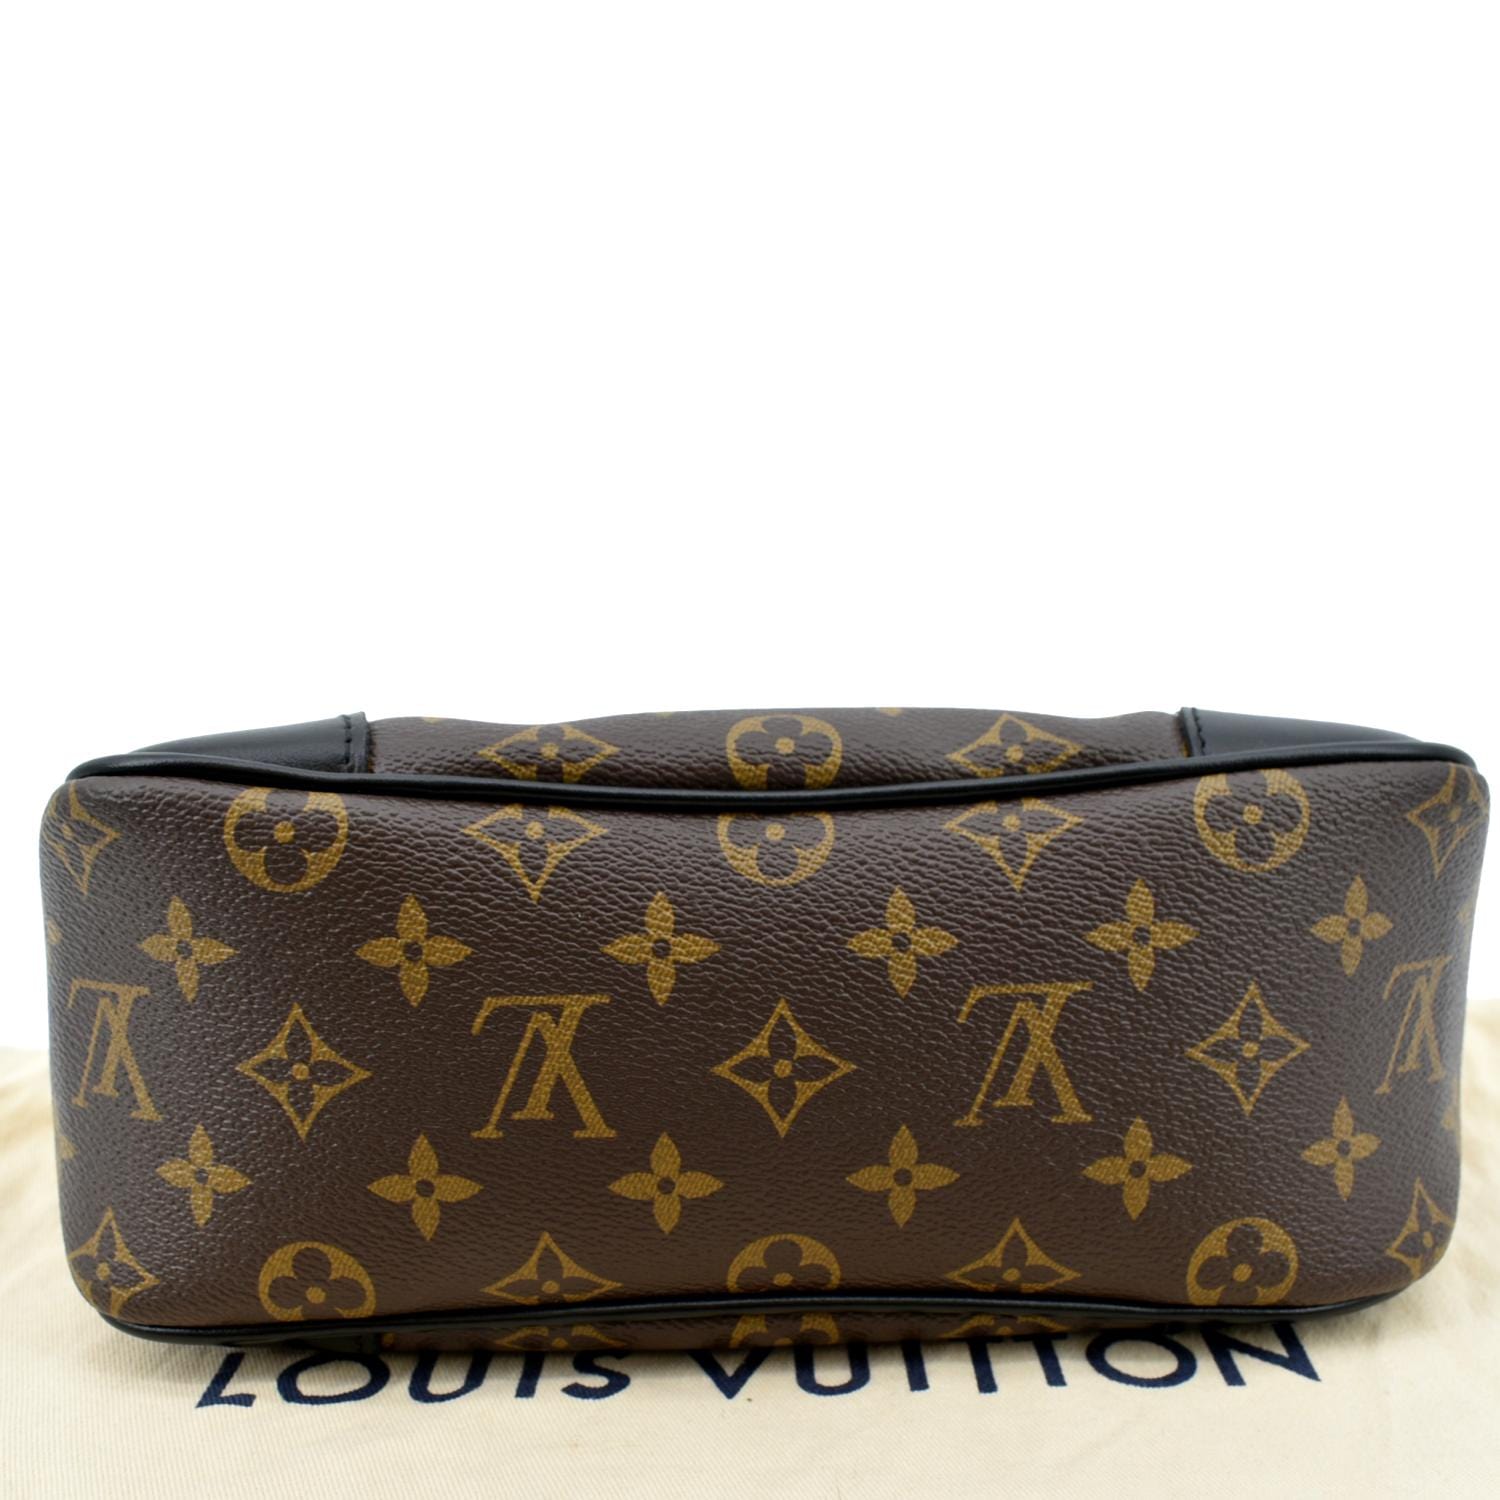 Authentic Louis Vuitton classic color crossbody bag, leather